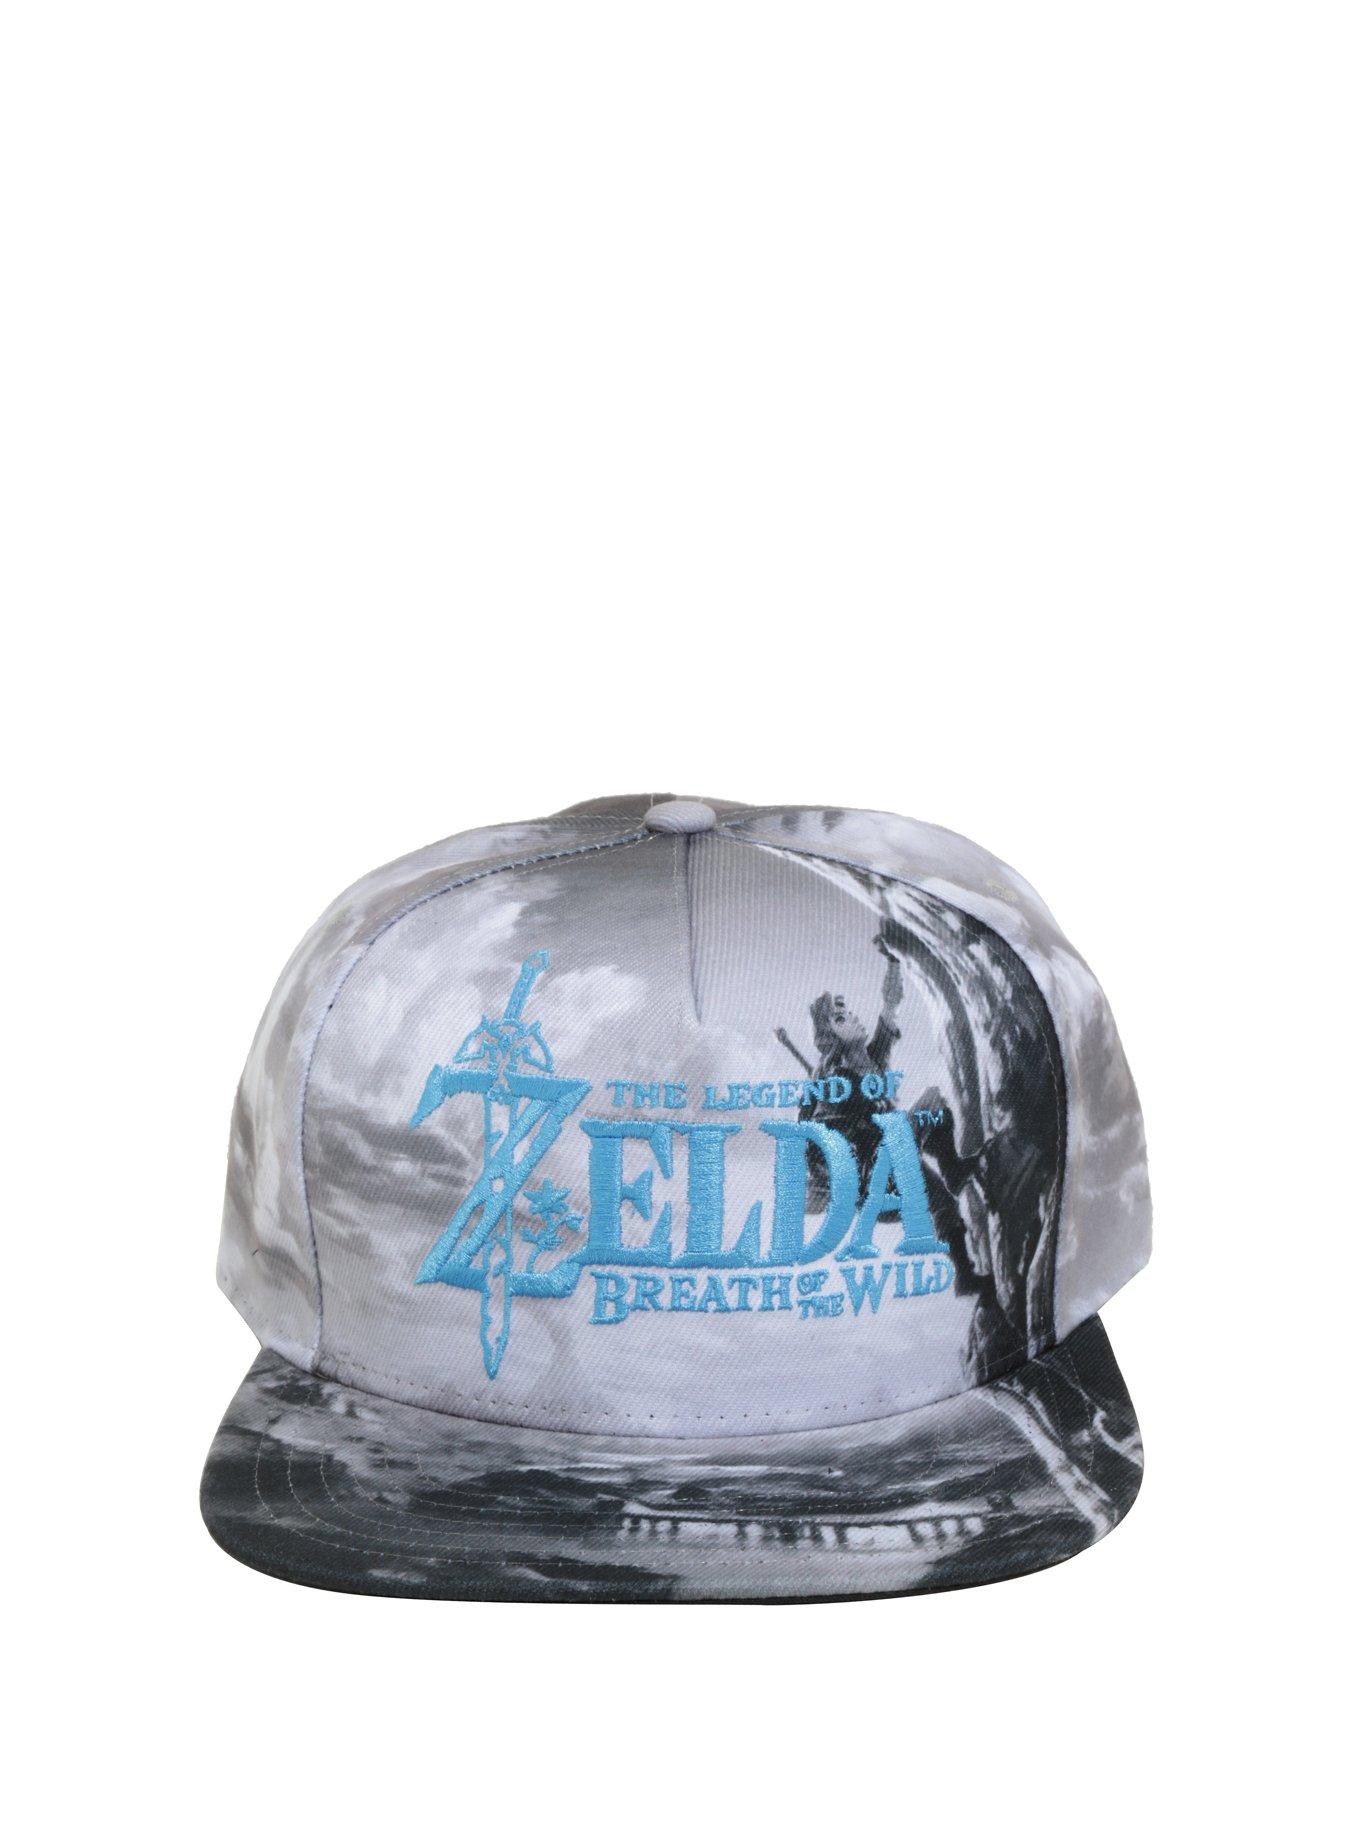 The Legend Of Zelda: Breath Of The Wild Black & White Sublimated Snapback Hat, , alternate